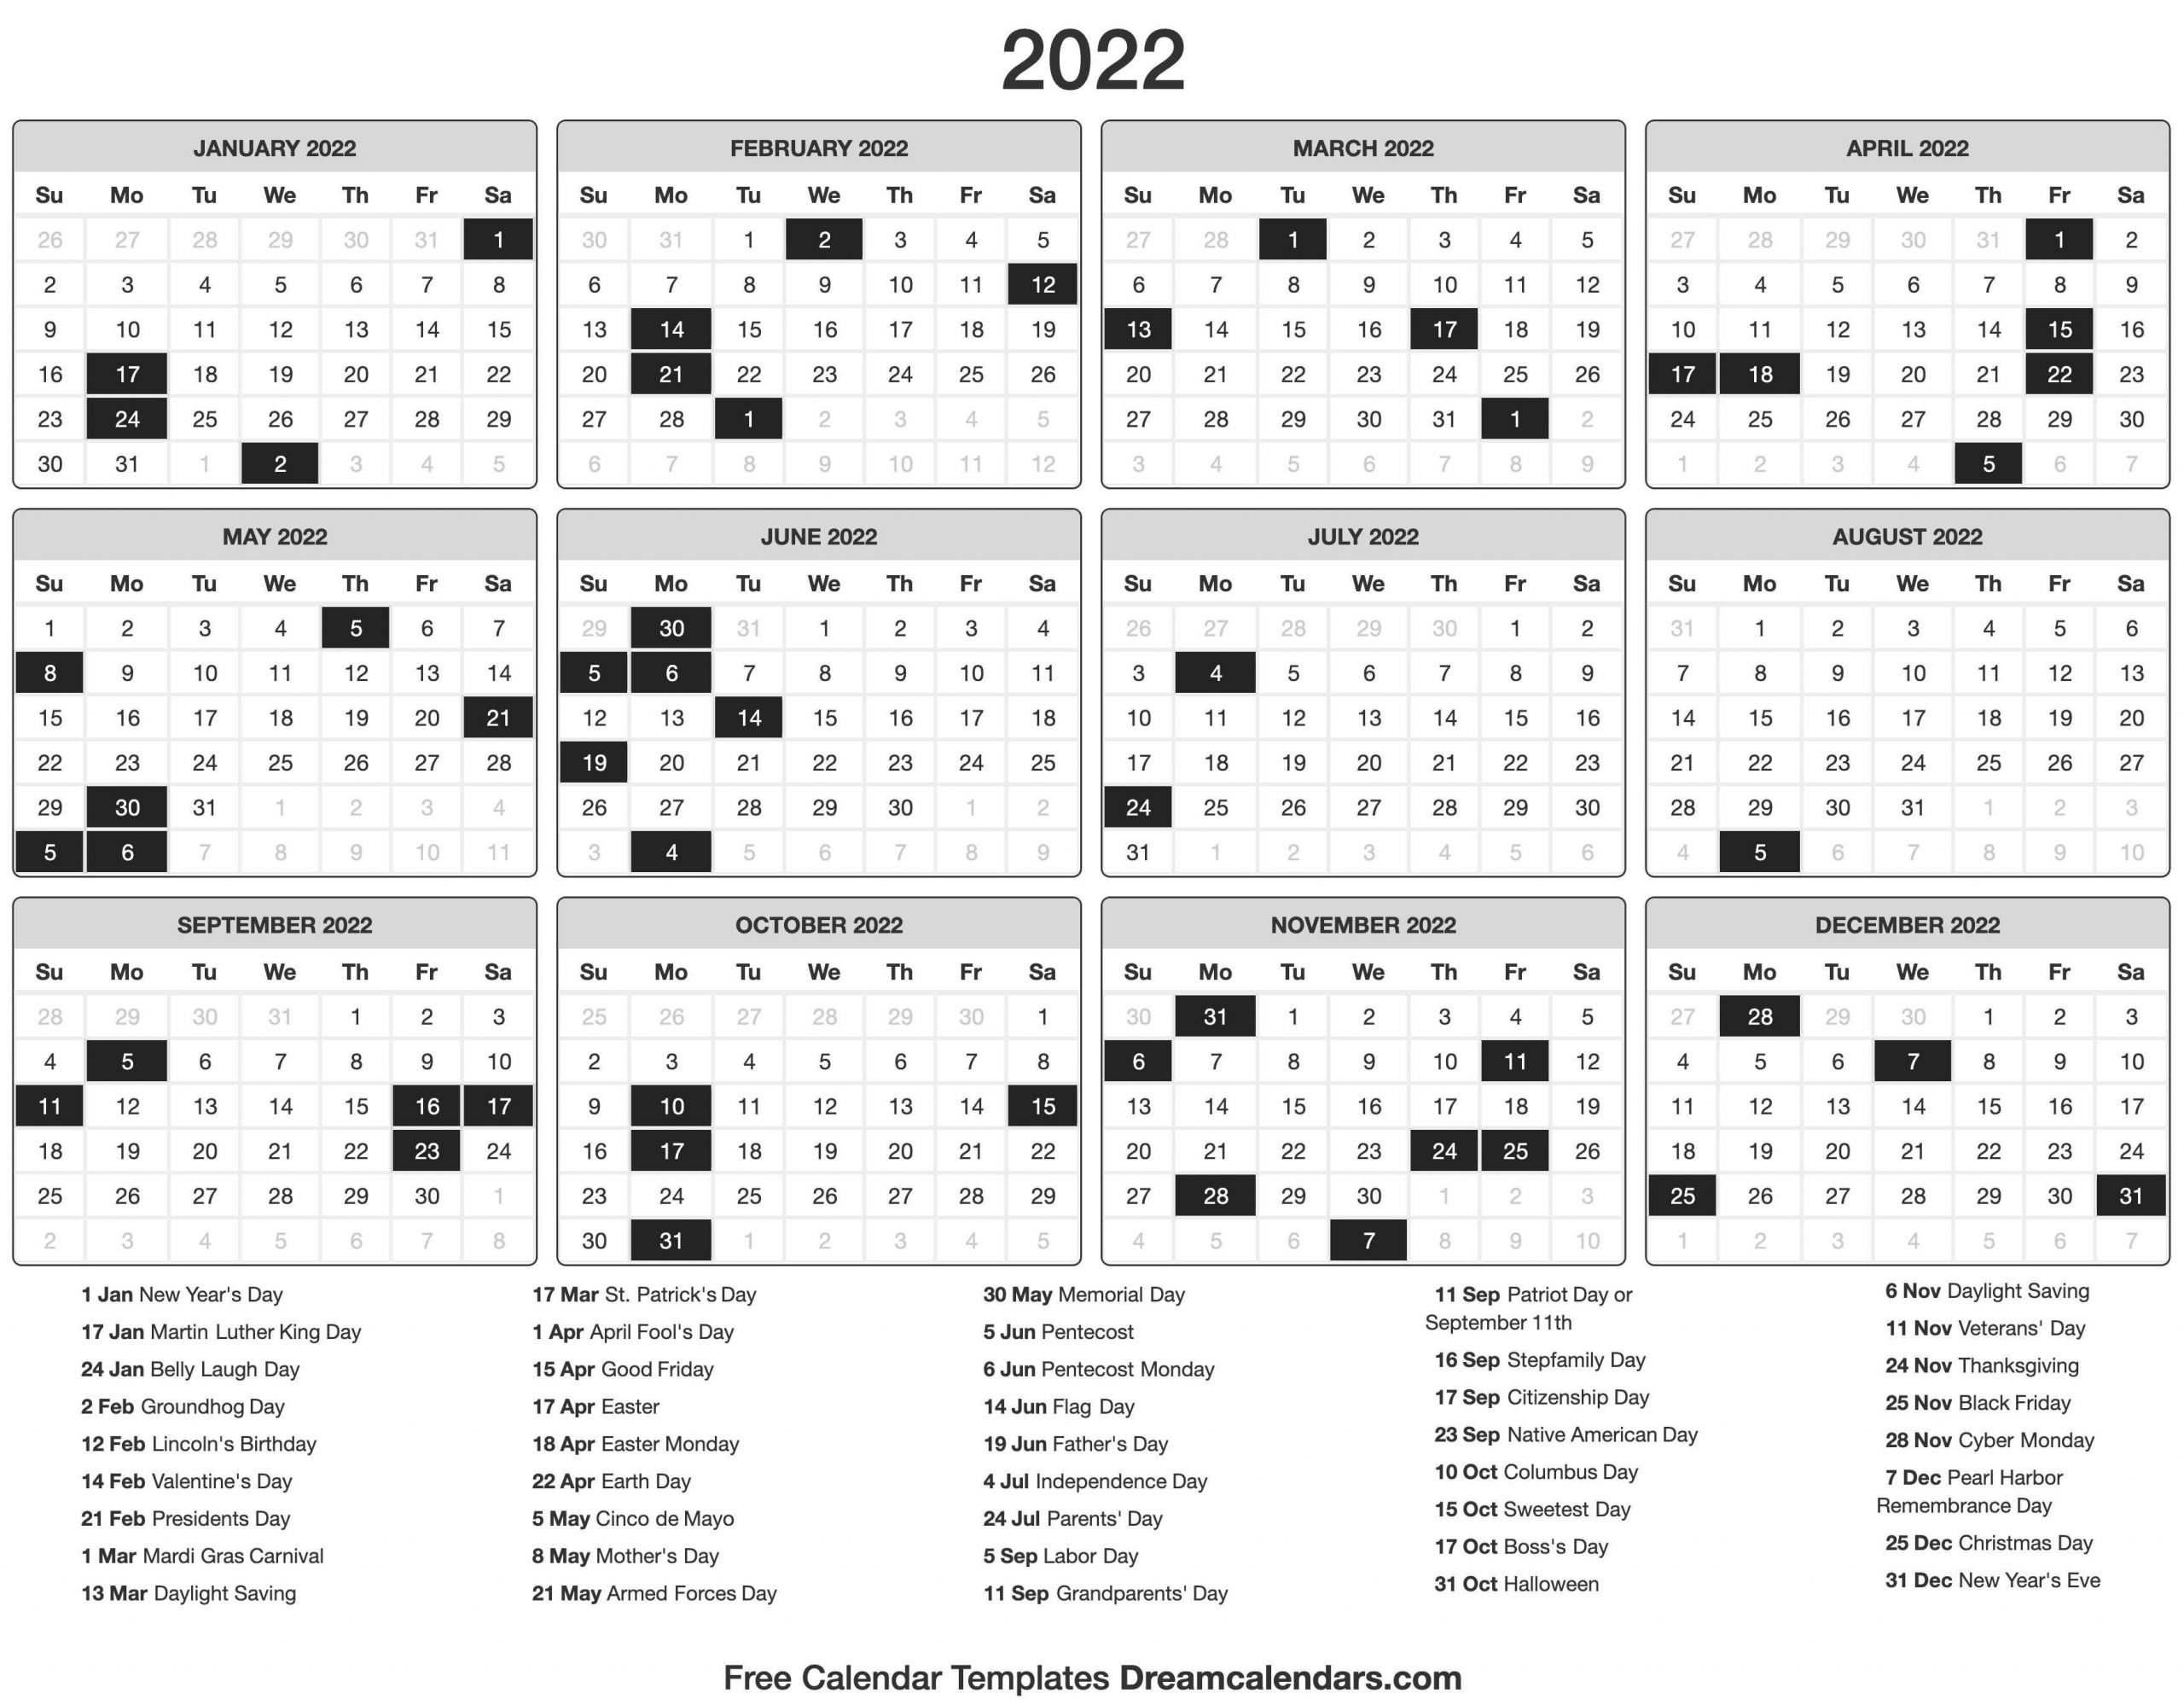 February 2022 Full Moon Calendar Free Printable Template